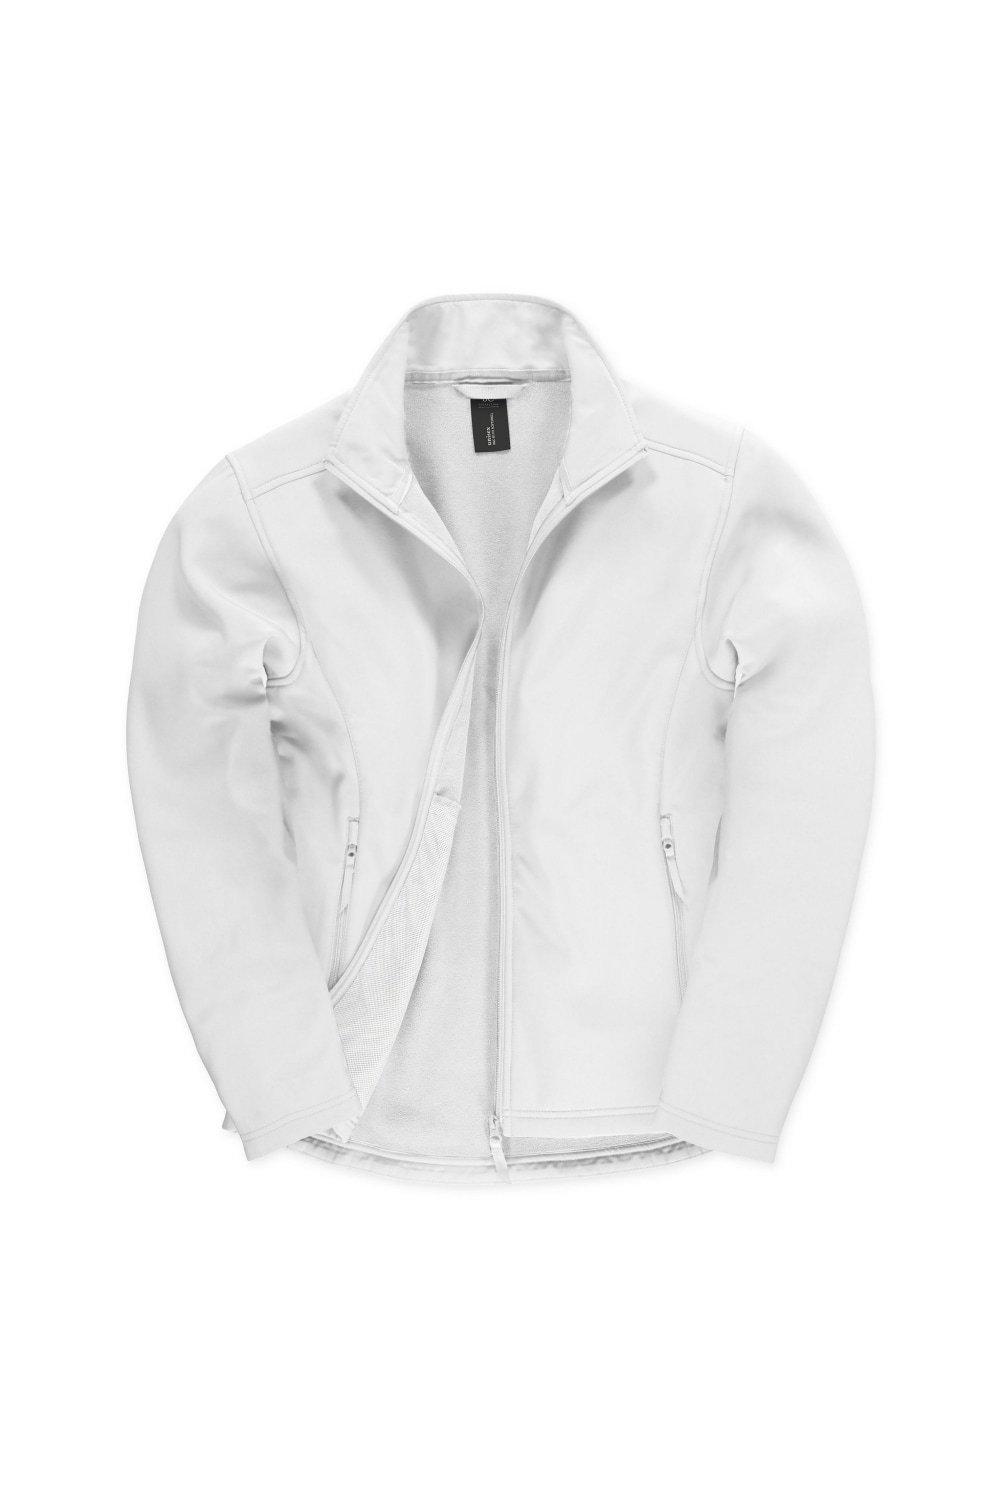 ID.701 Куртка Soft Shell B&C, белый